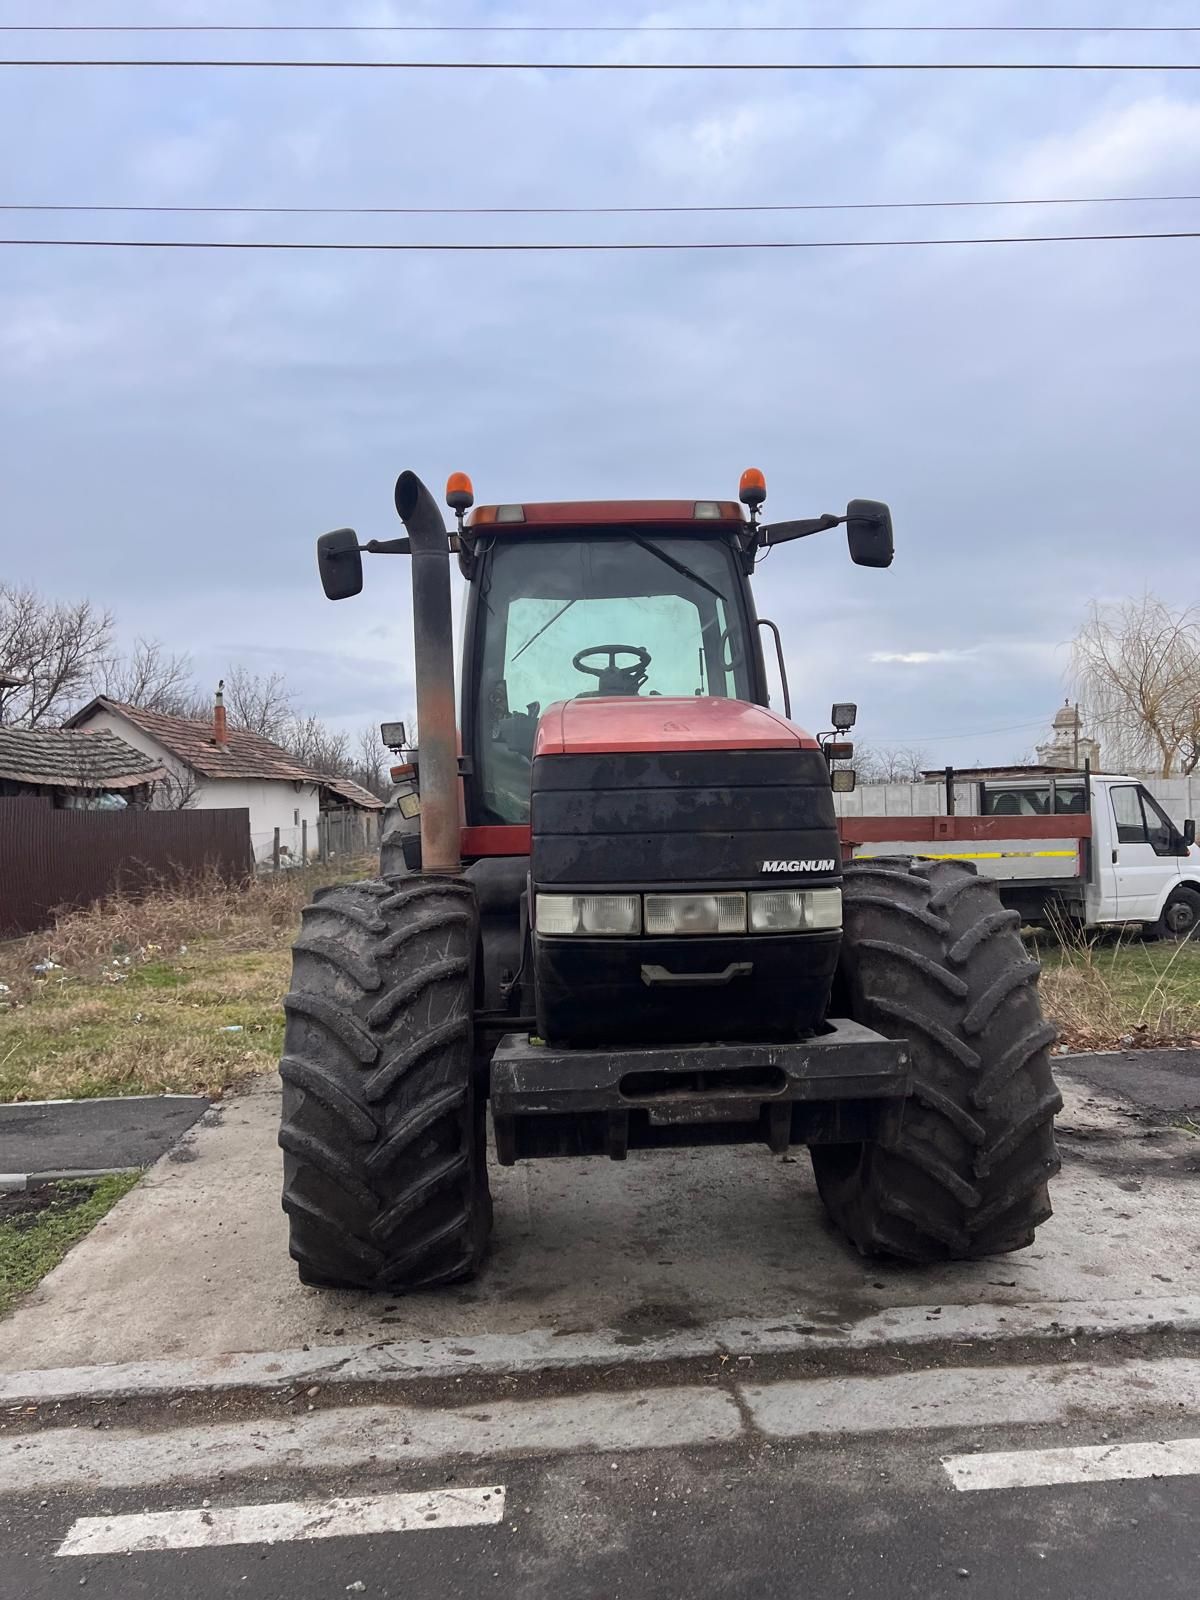 Tractor Case IH MX 220